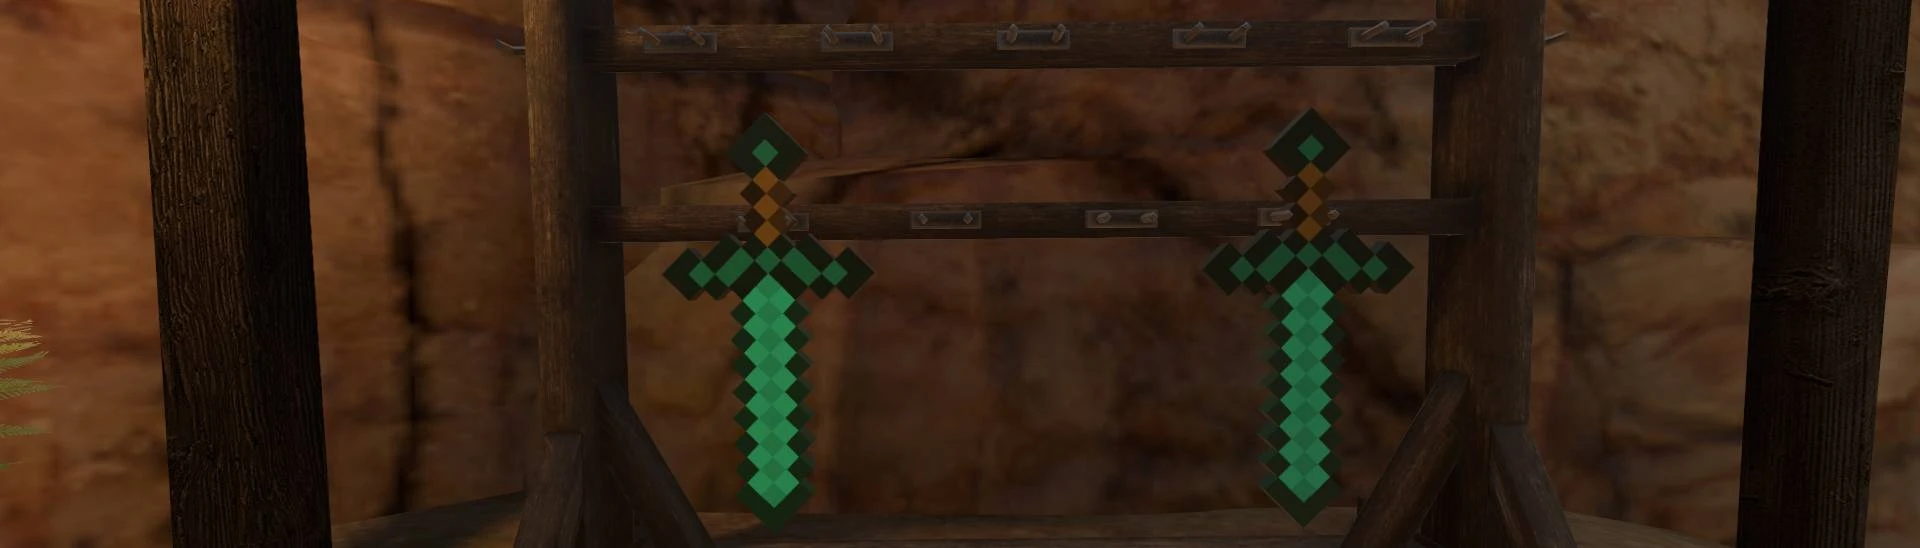 Minecraft Sword Styles at Stardew Valley Nexus - Mods and community